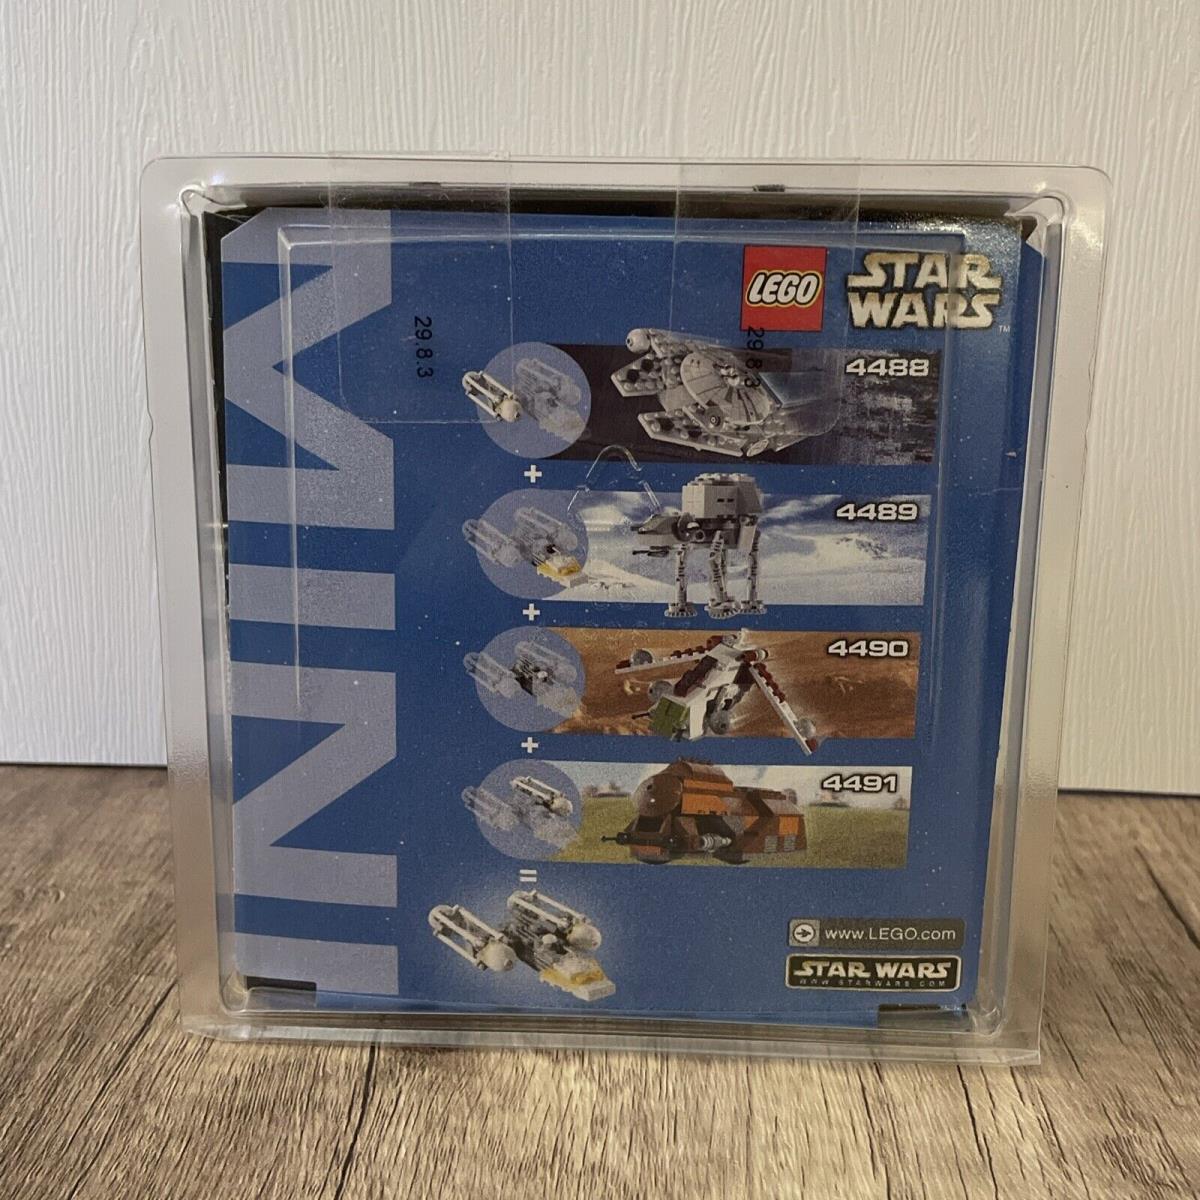 Lego 4488 Star Wars Mini Building Set - Millennium Falcon - Retired